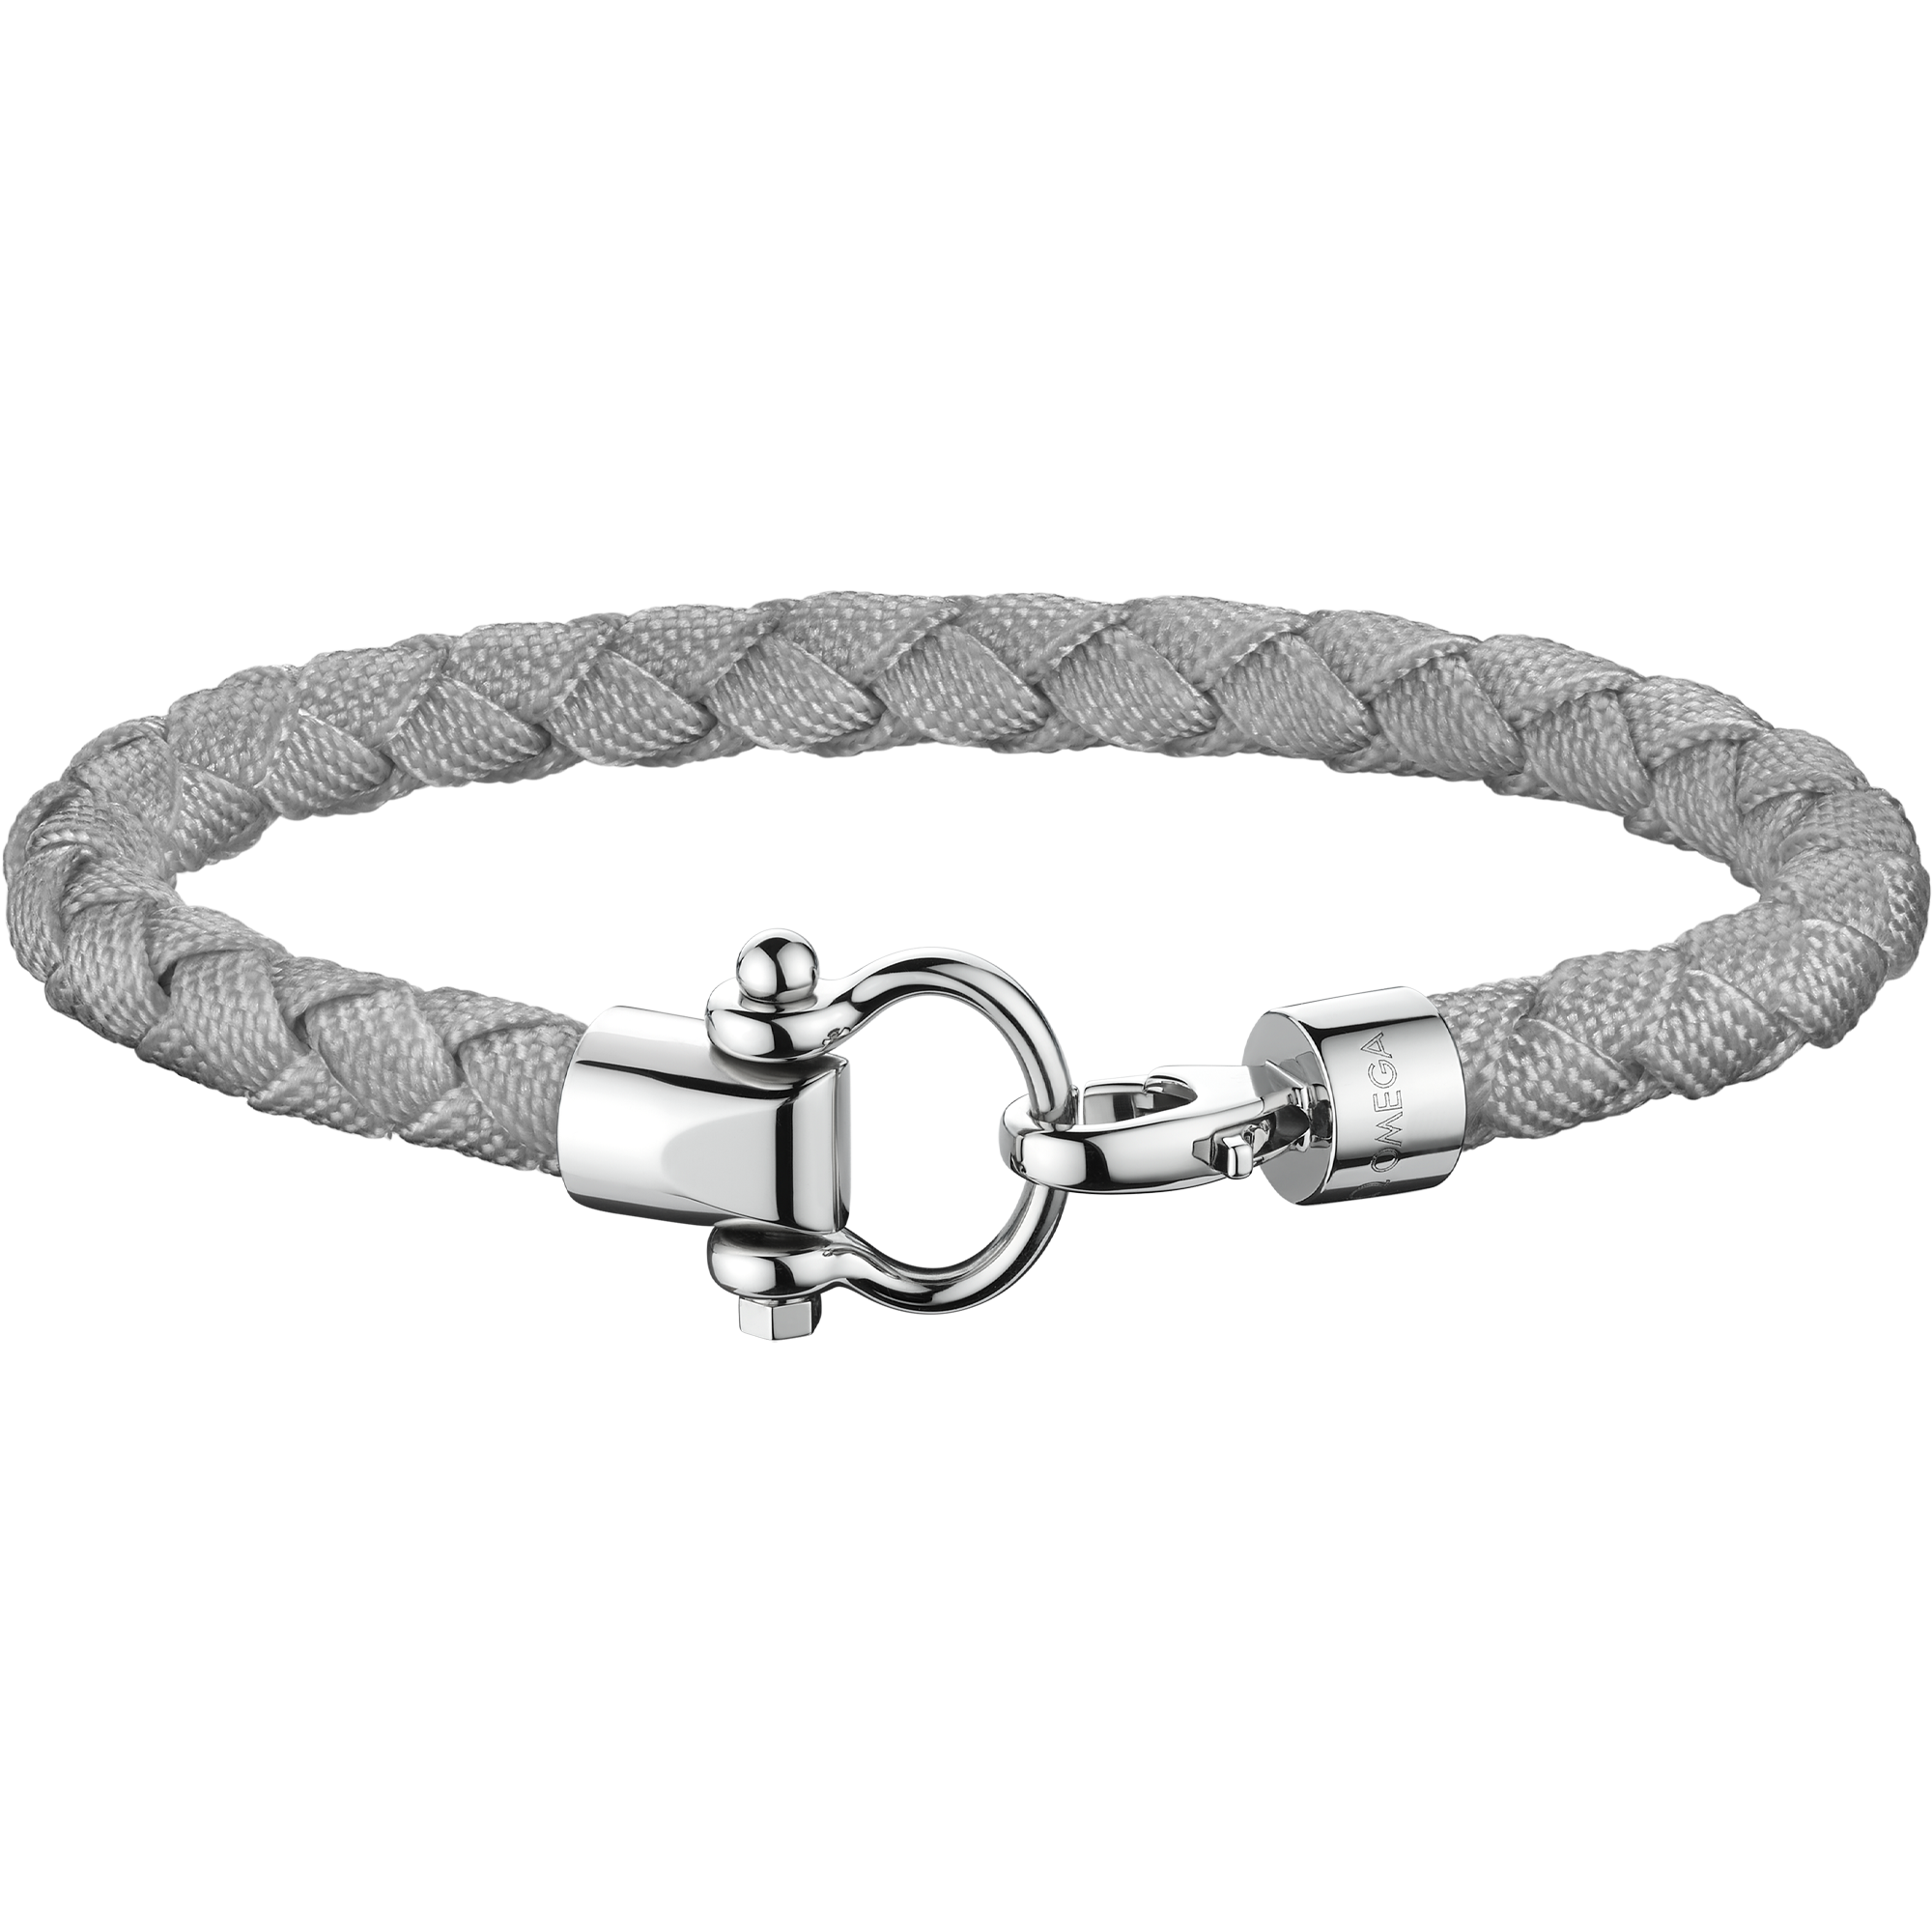 Omega Aqua Sailing Bracelet, Grey braided nylon, Stainless steel - BA05CW00009R2